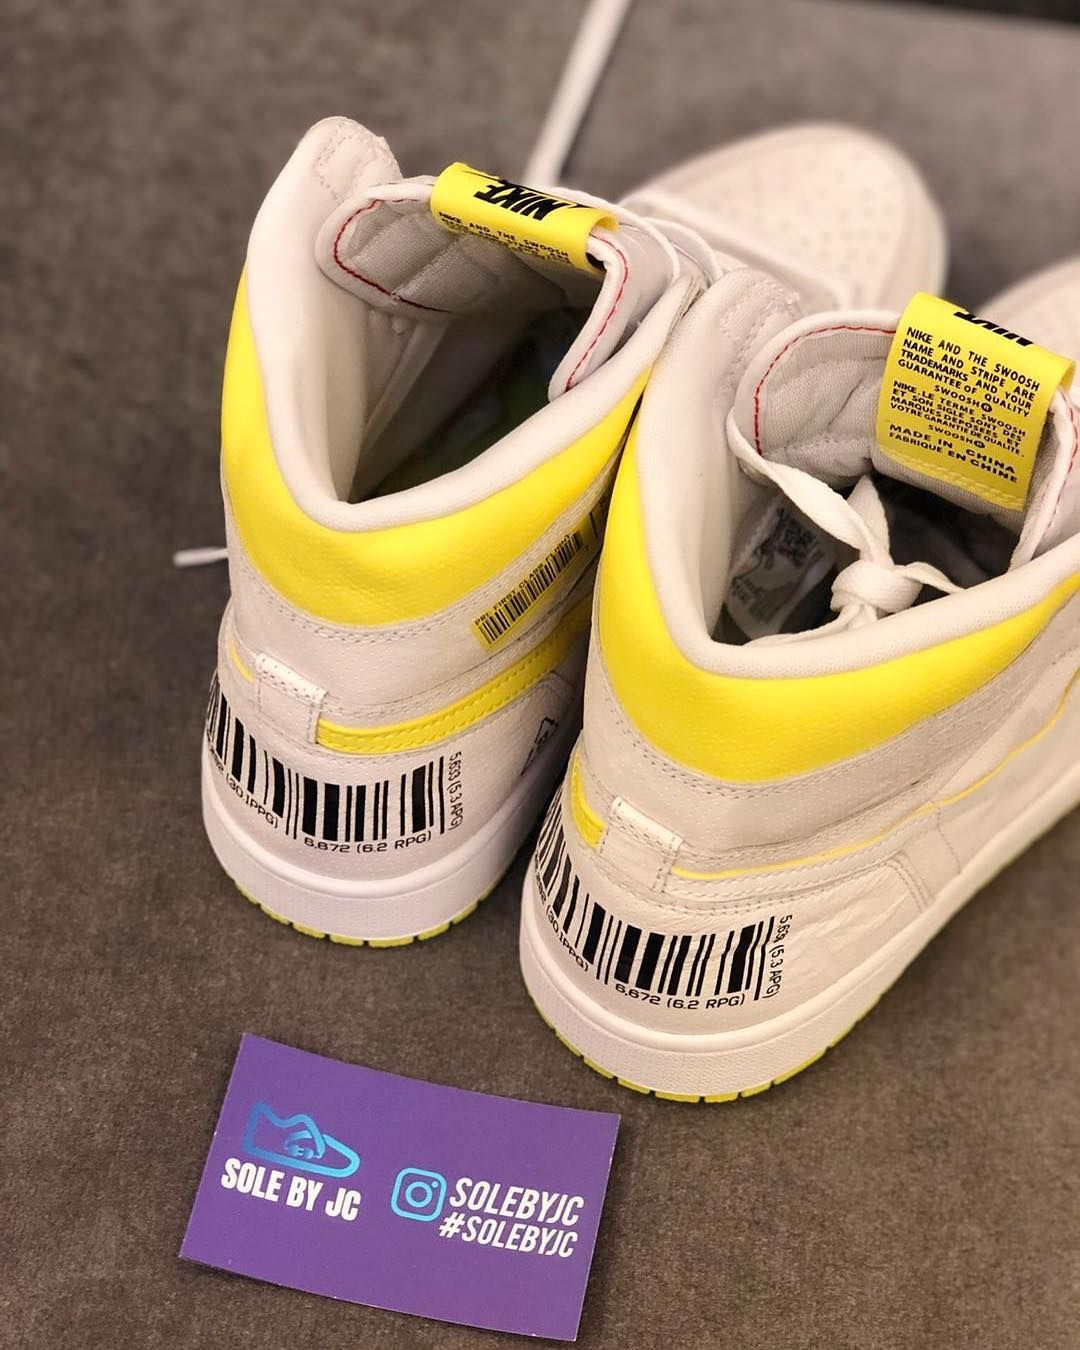 yellow barcode jordan 1